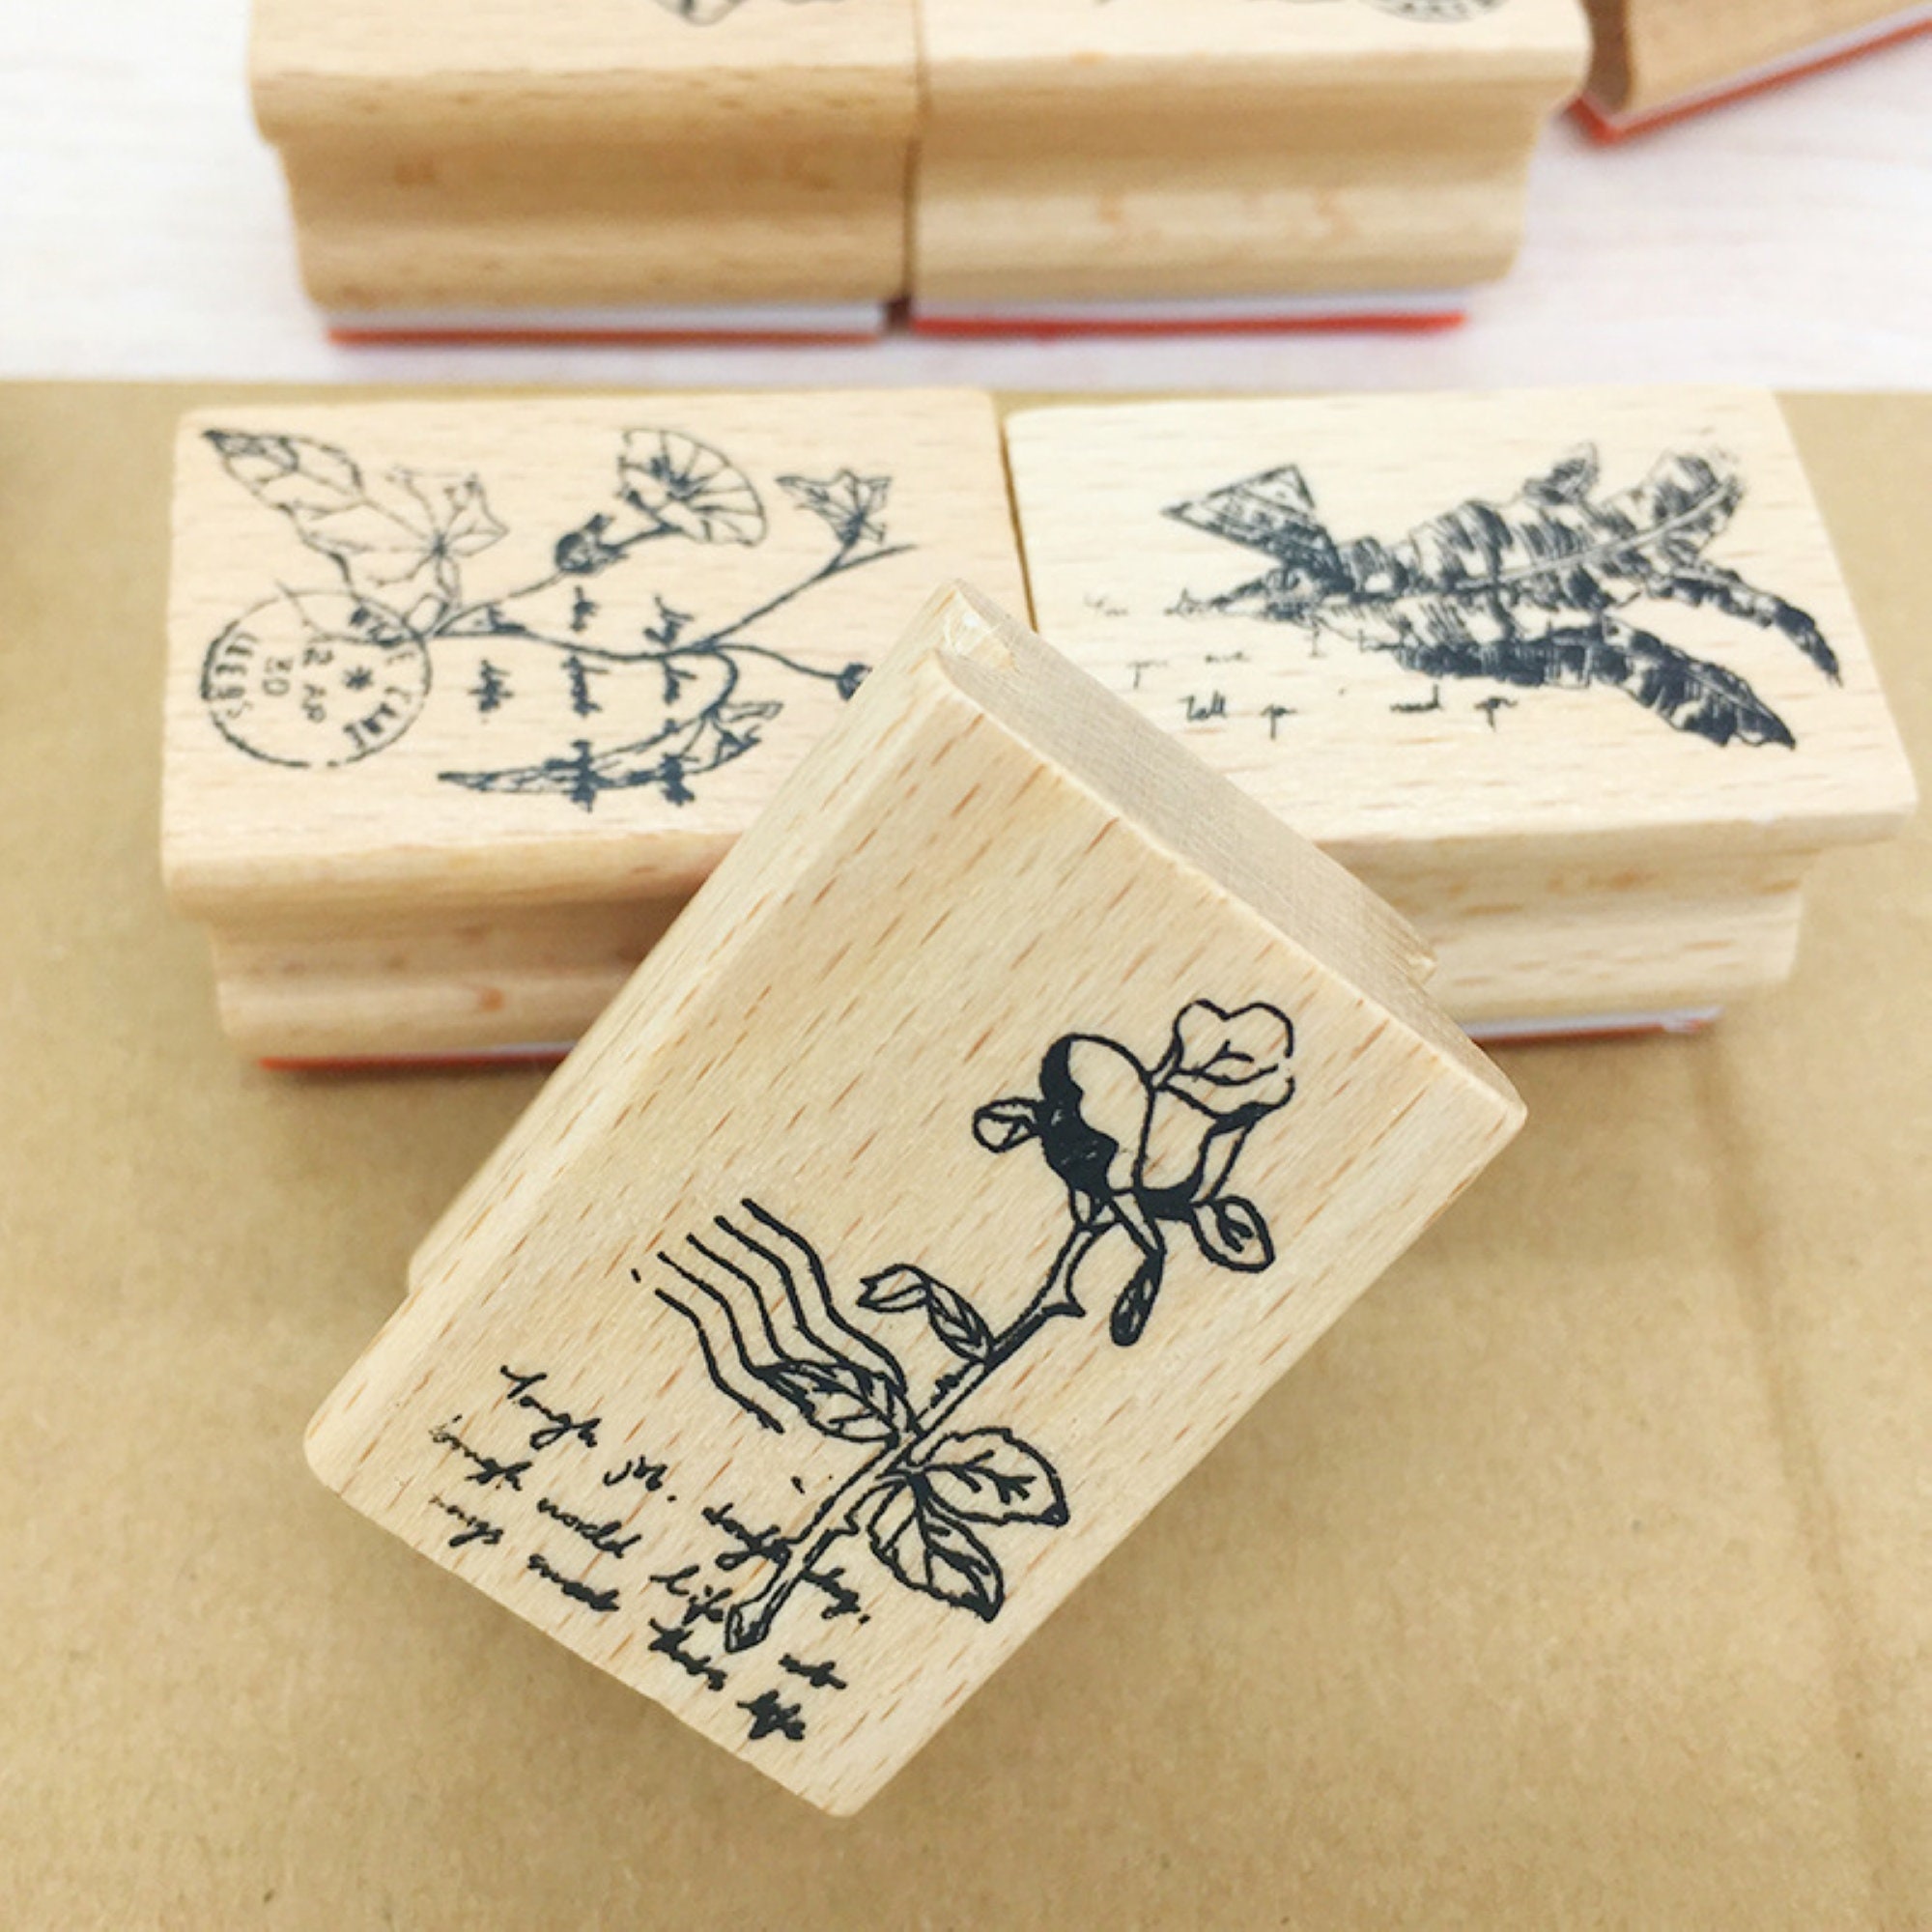 Ready Made Rubber Stamp - Broken Memories Series Vintage Wooden Rubber Stamp